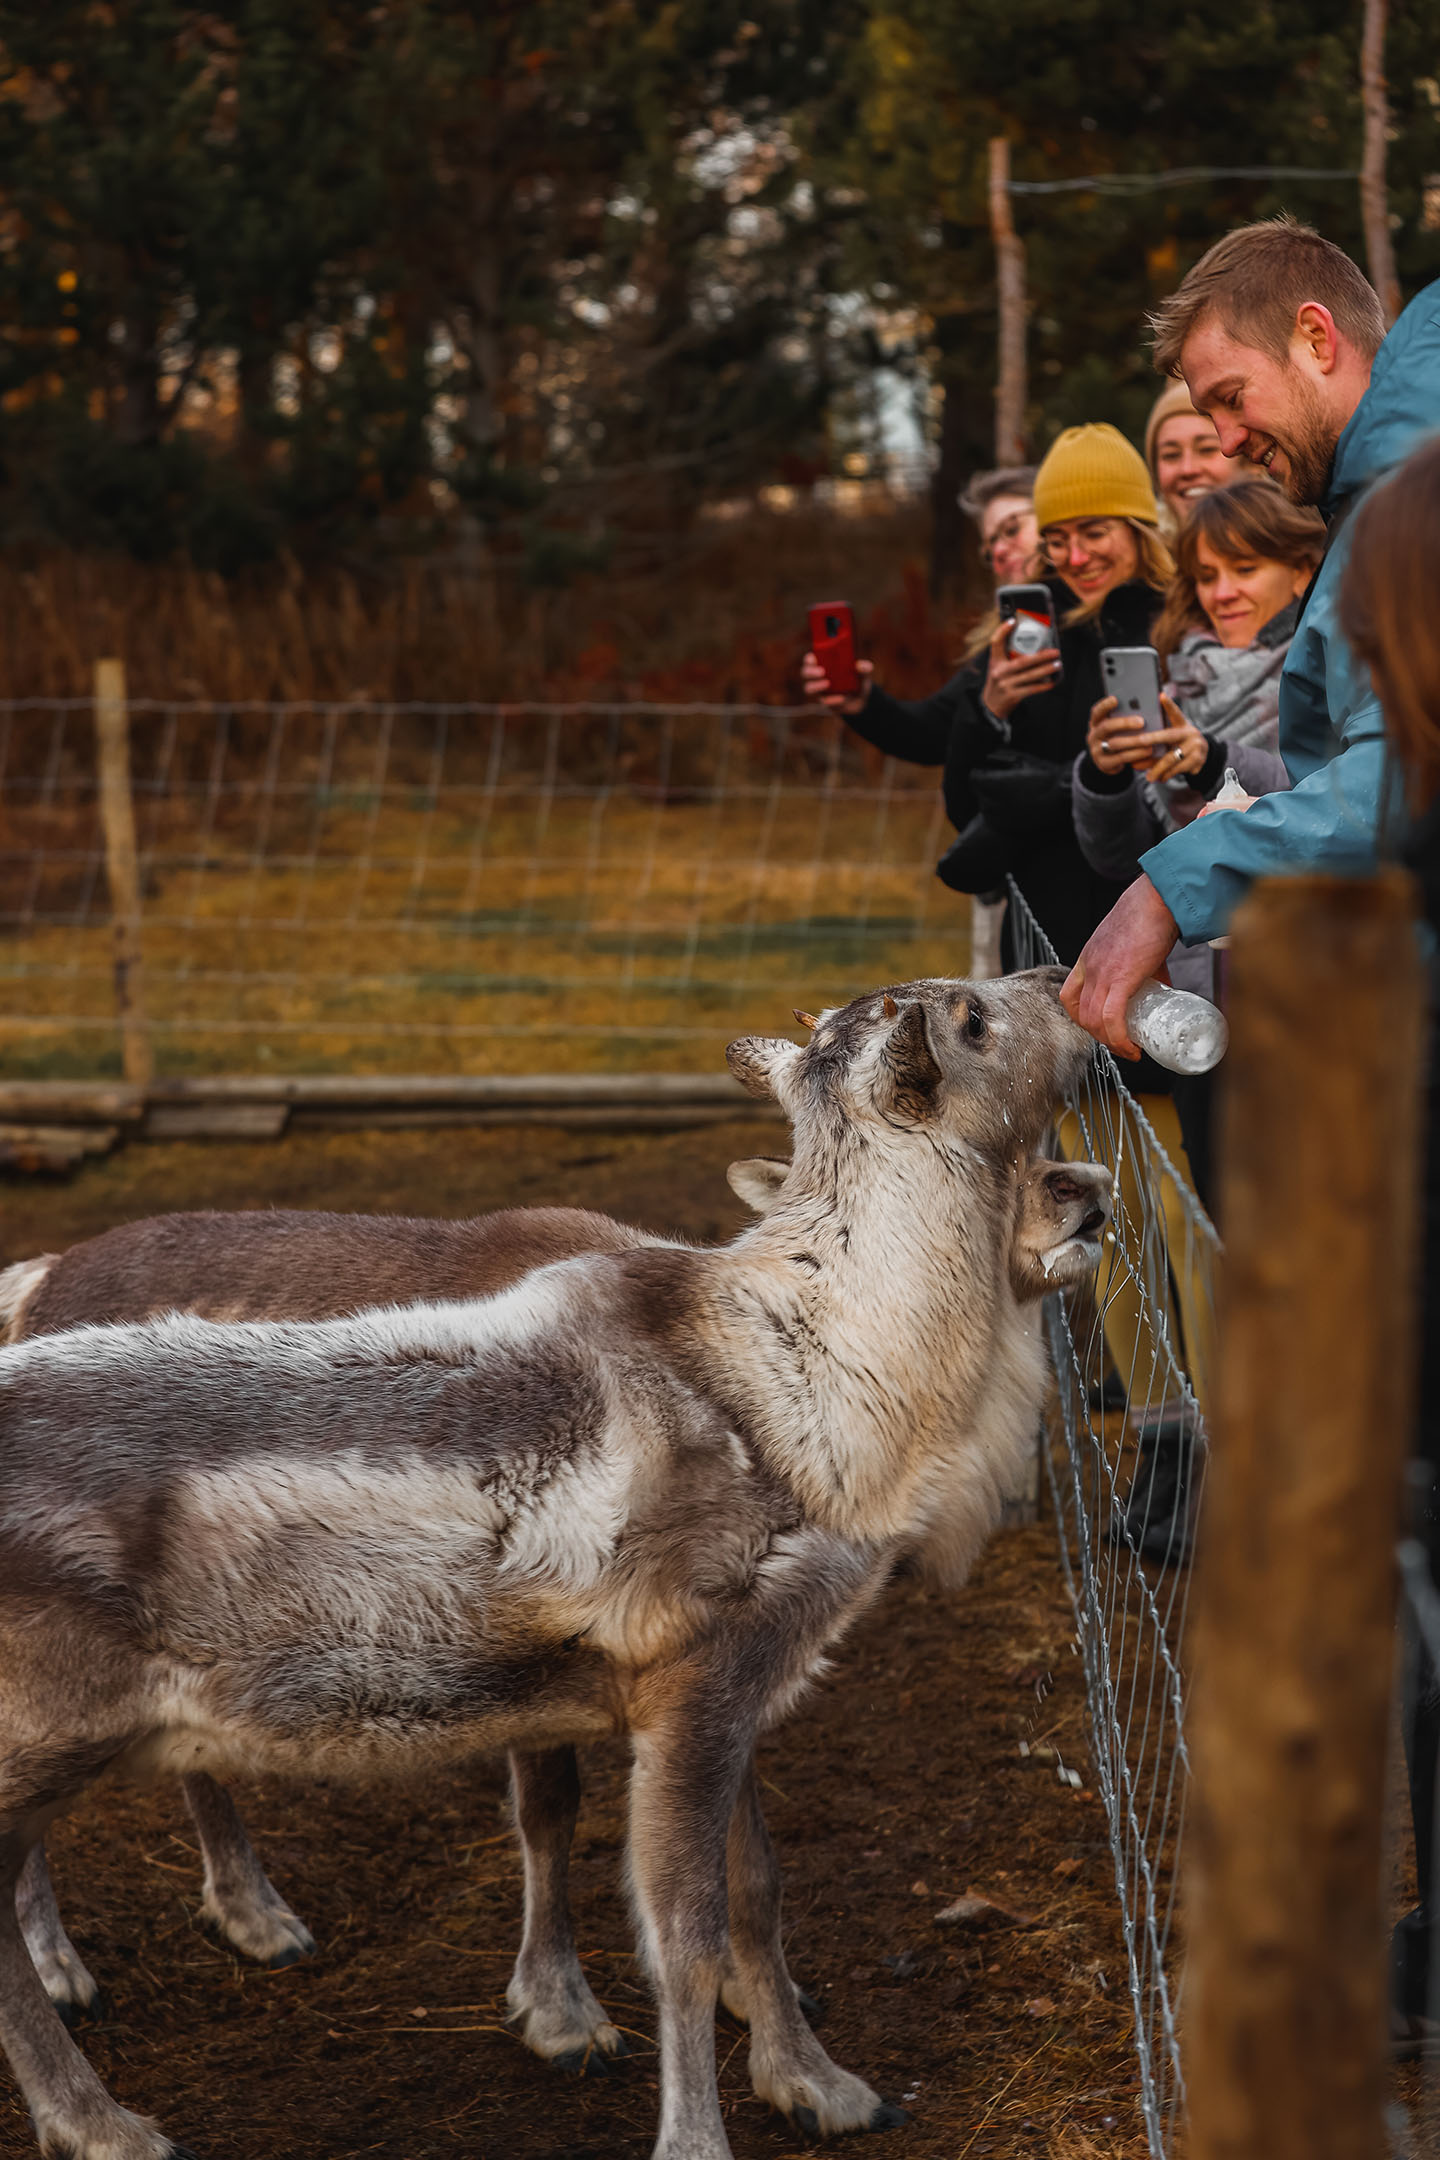 Reindeer calves Garpur and Mosi entertaining guests at Vinland guesthouse.